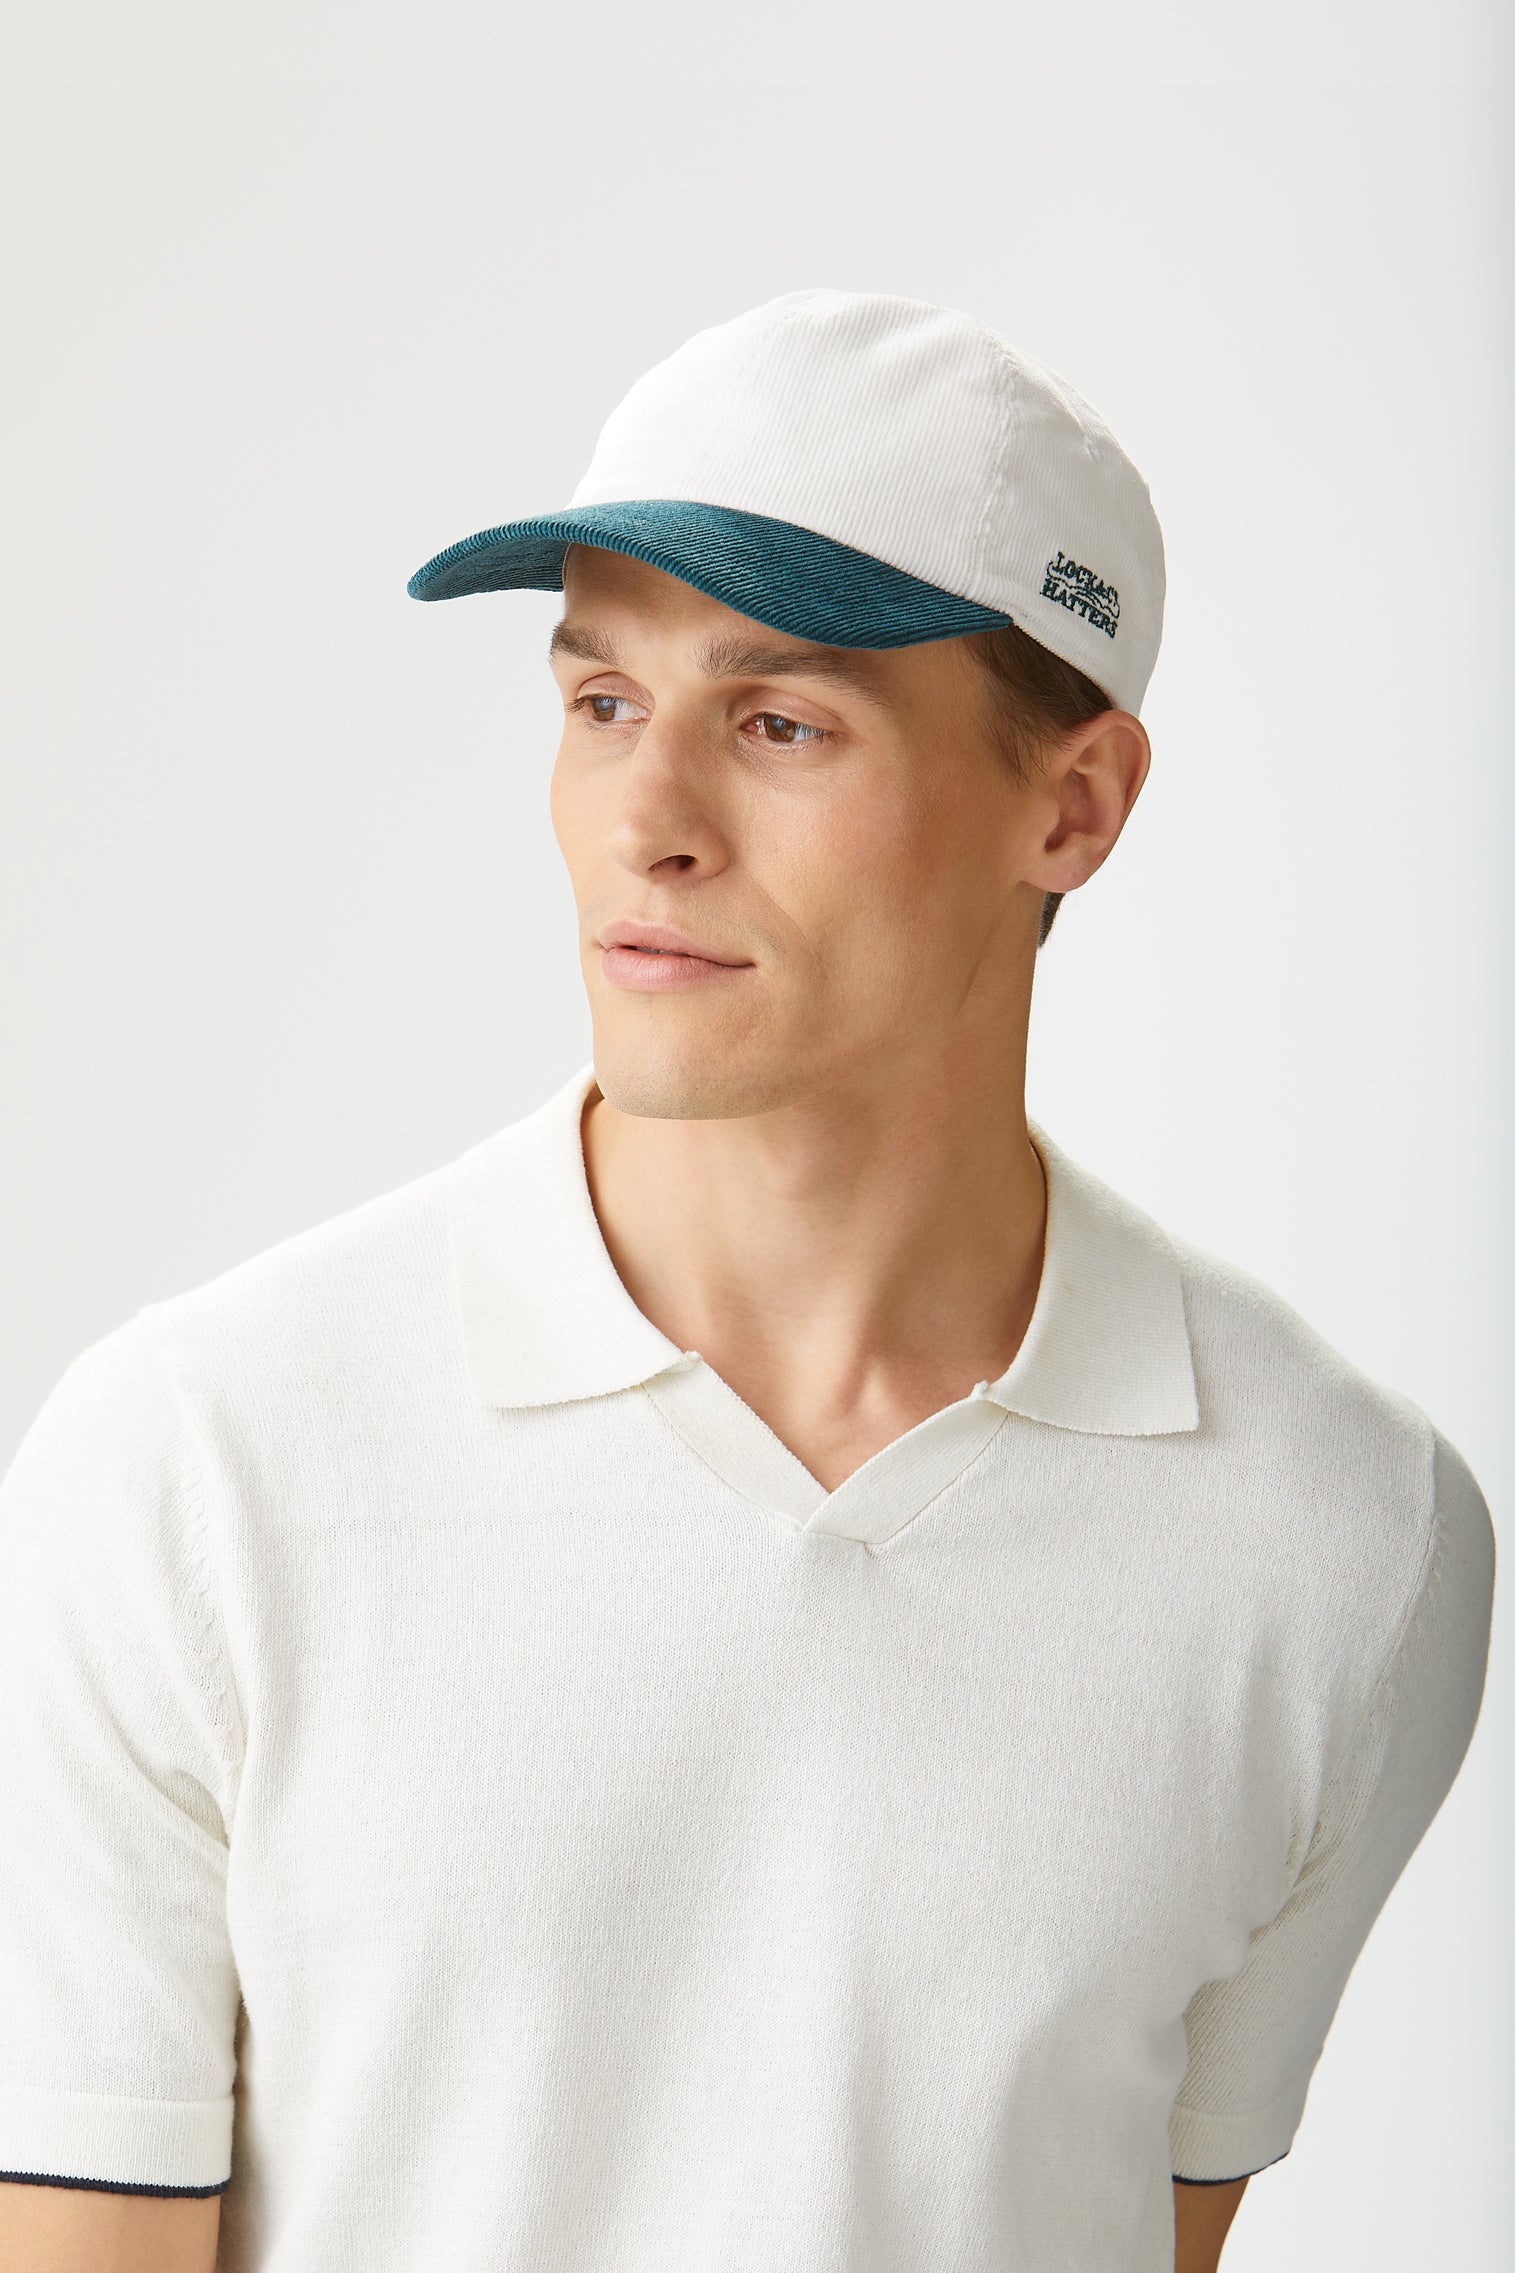 Adjustable Two-Tone Cord Baseball Cap - New Season Men's Hats - Lock & Co. Hatters London UK